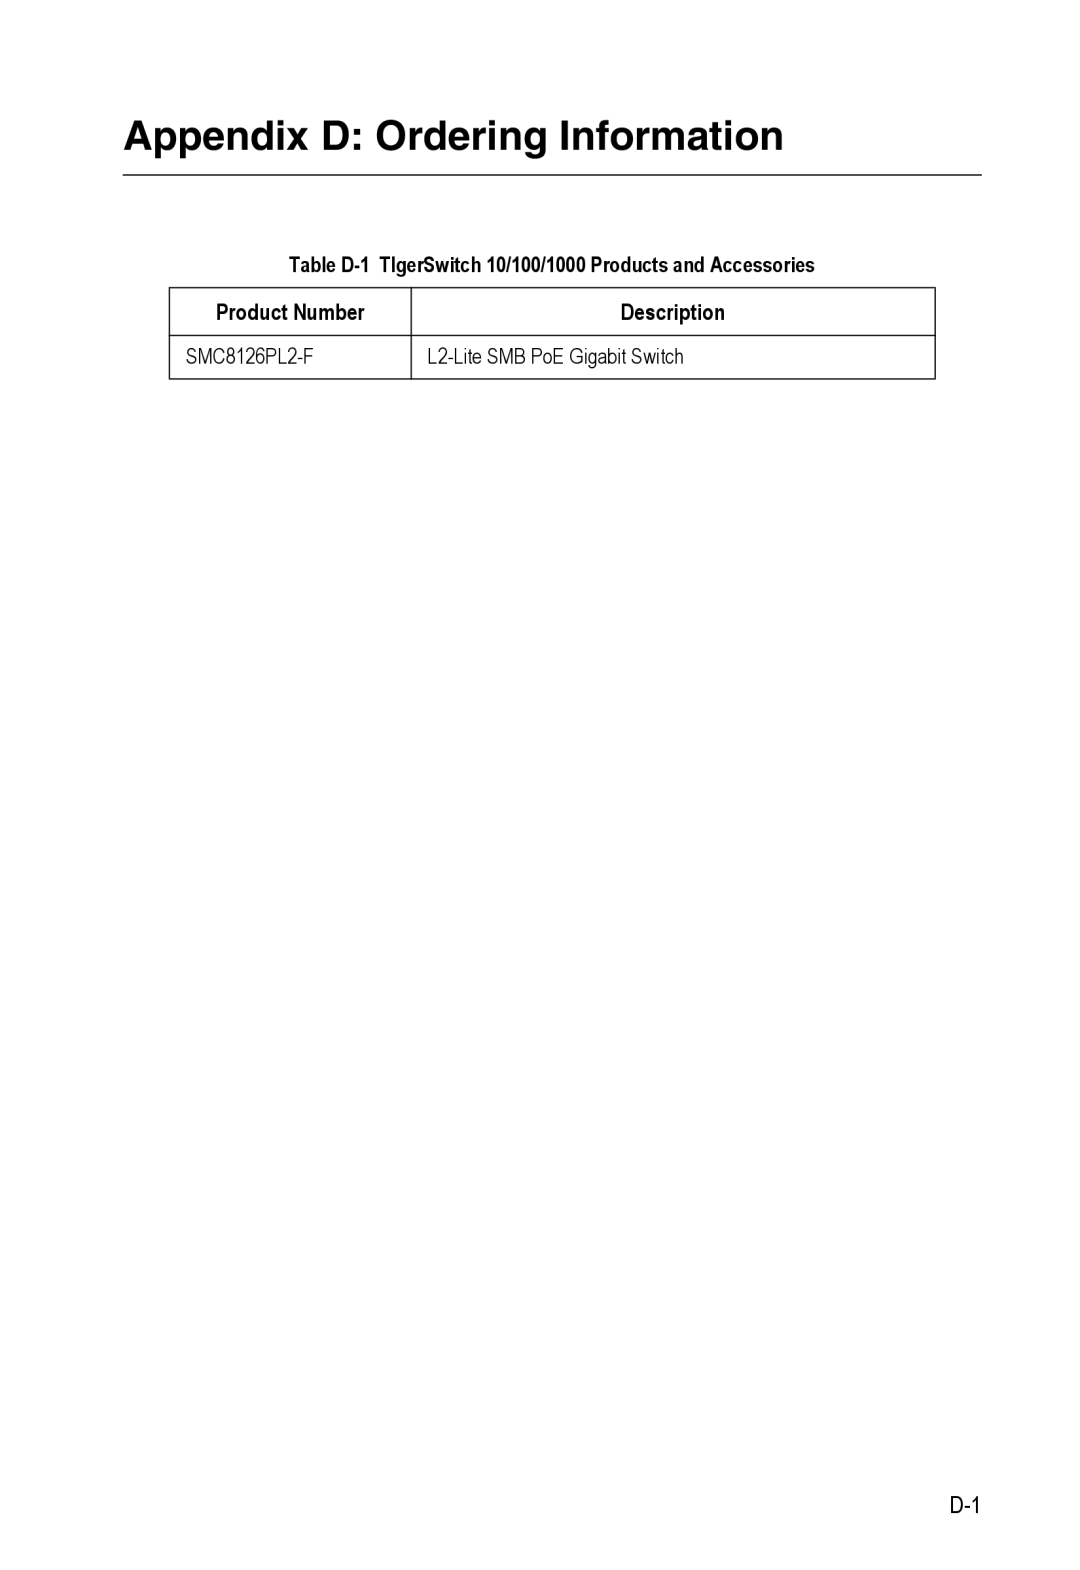 SMC Networks SMC8126PL2-F manual Appendix D Ordering Information, Product Number, Description 